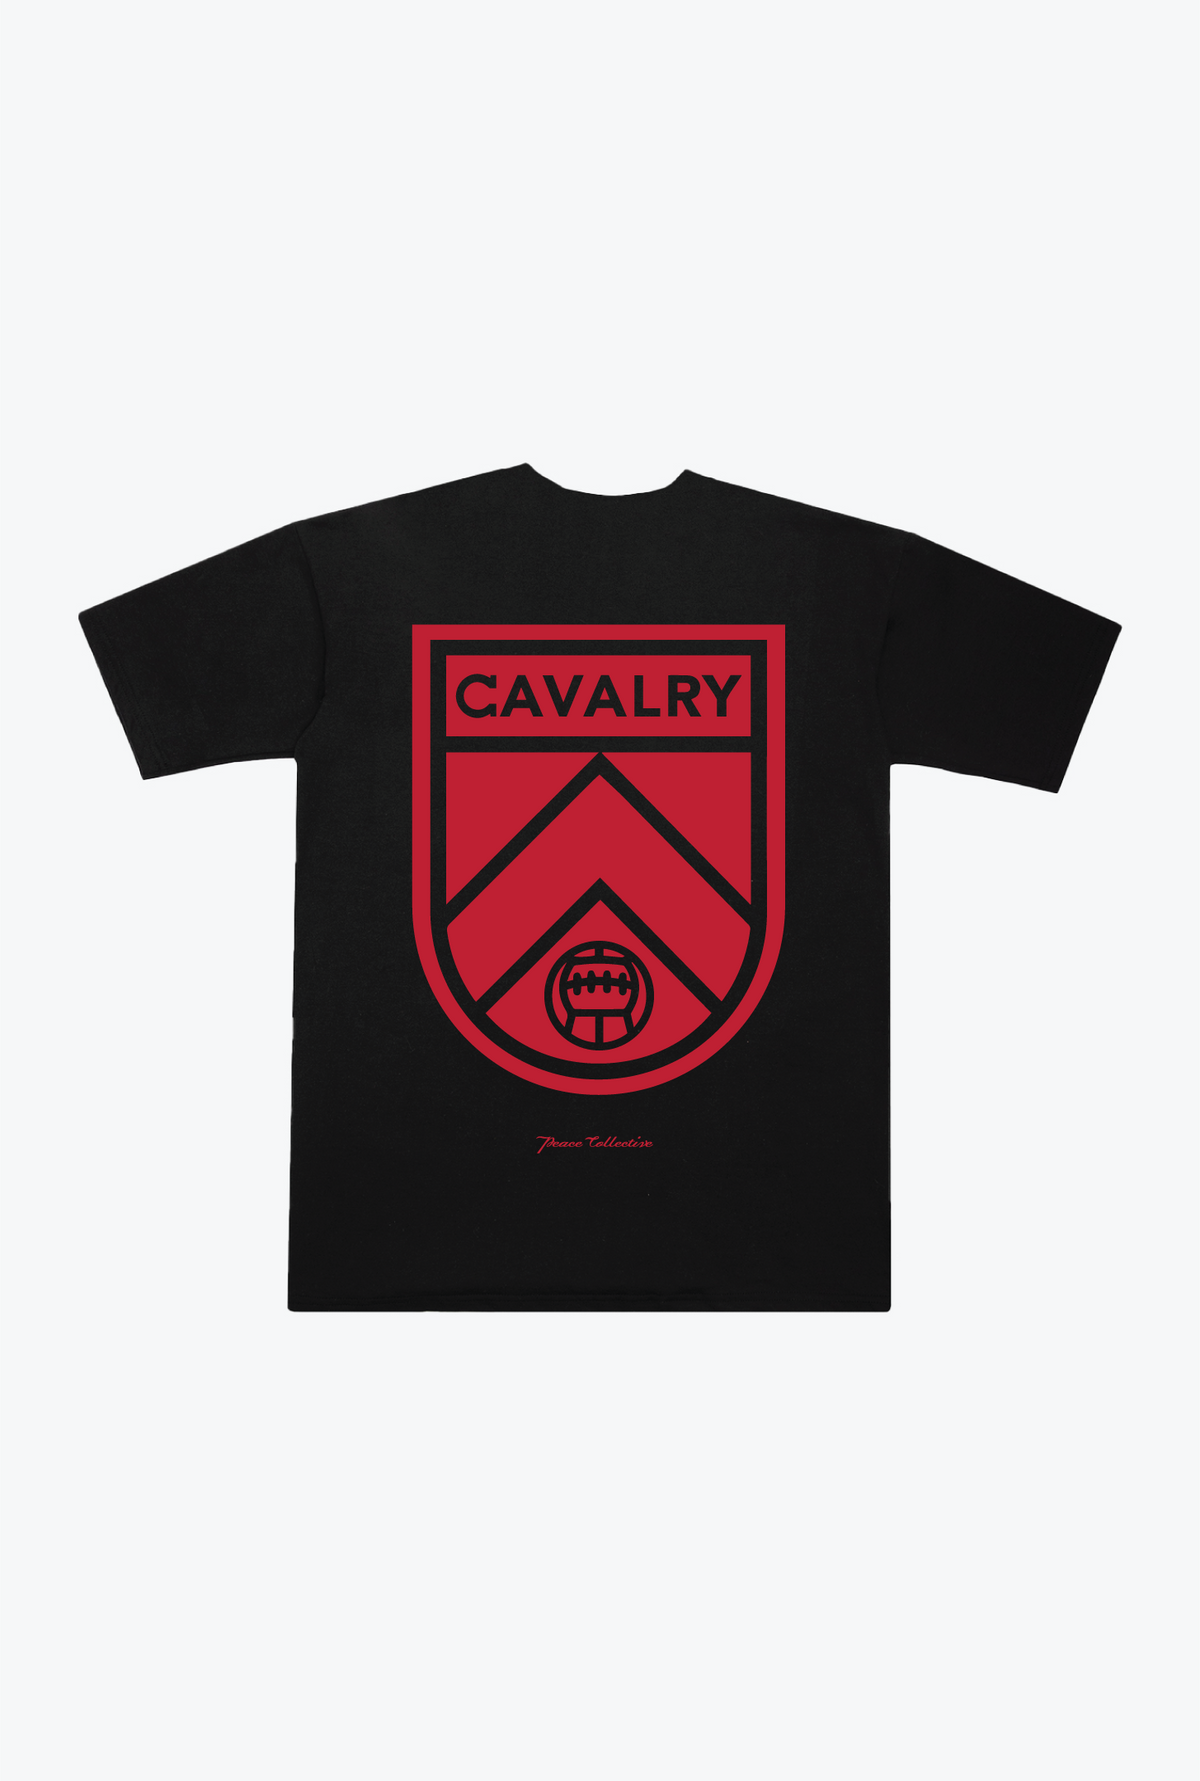 Cavalry FC Heavyweight T-Shirt - Black